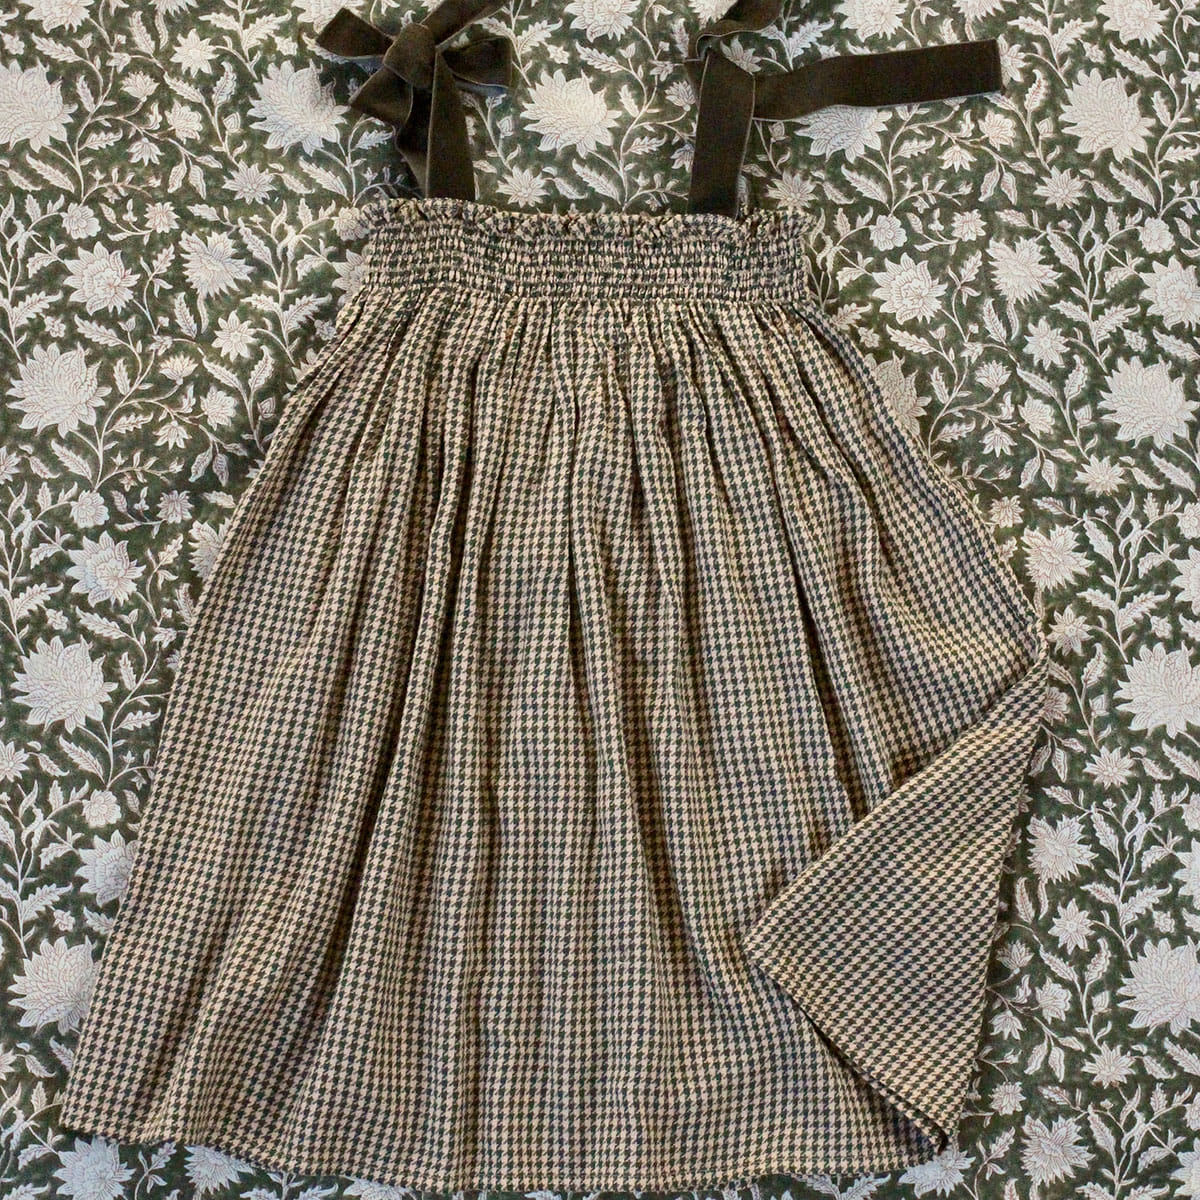 Long skirt / dress(Check fabric)